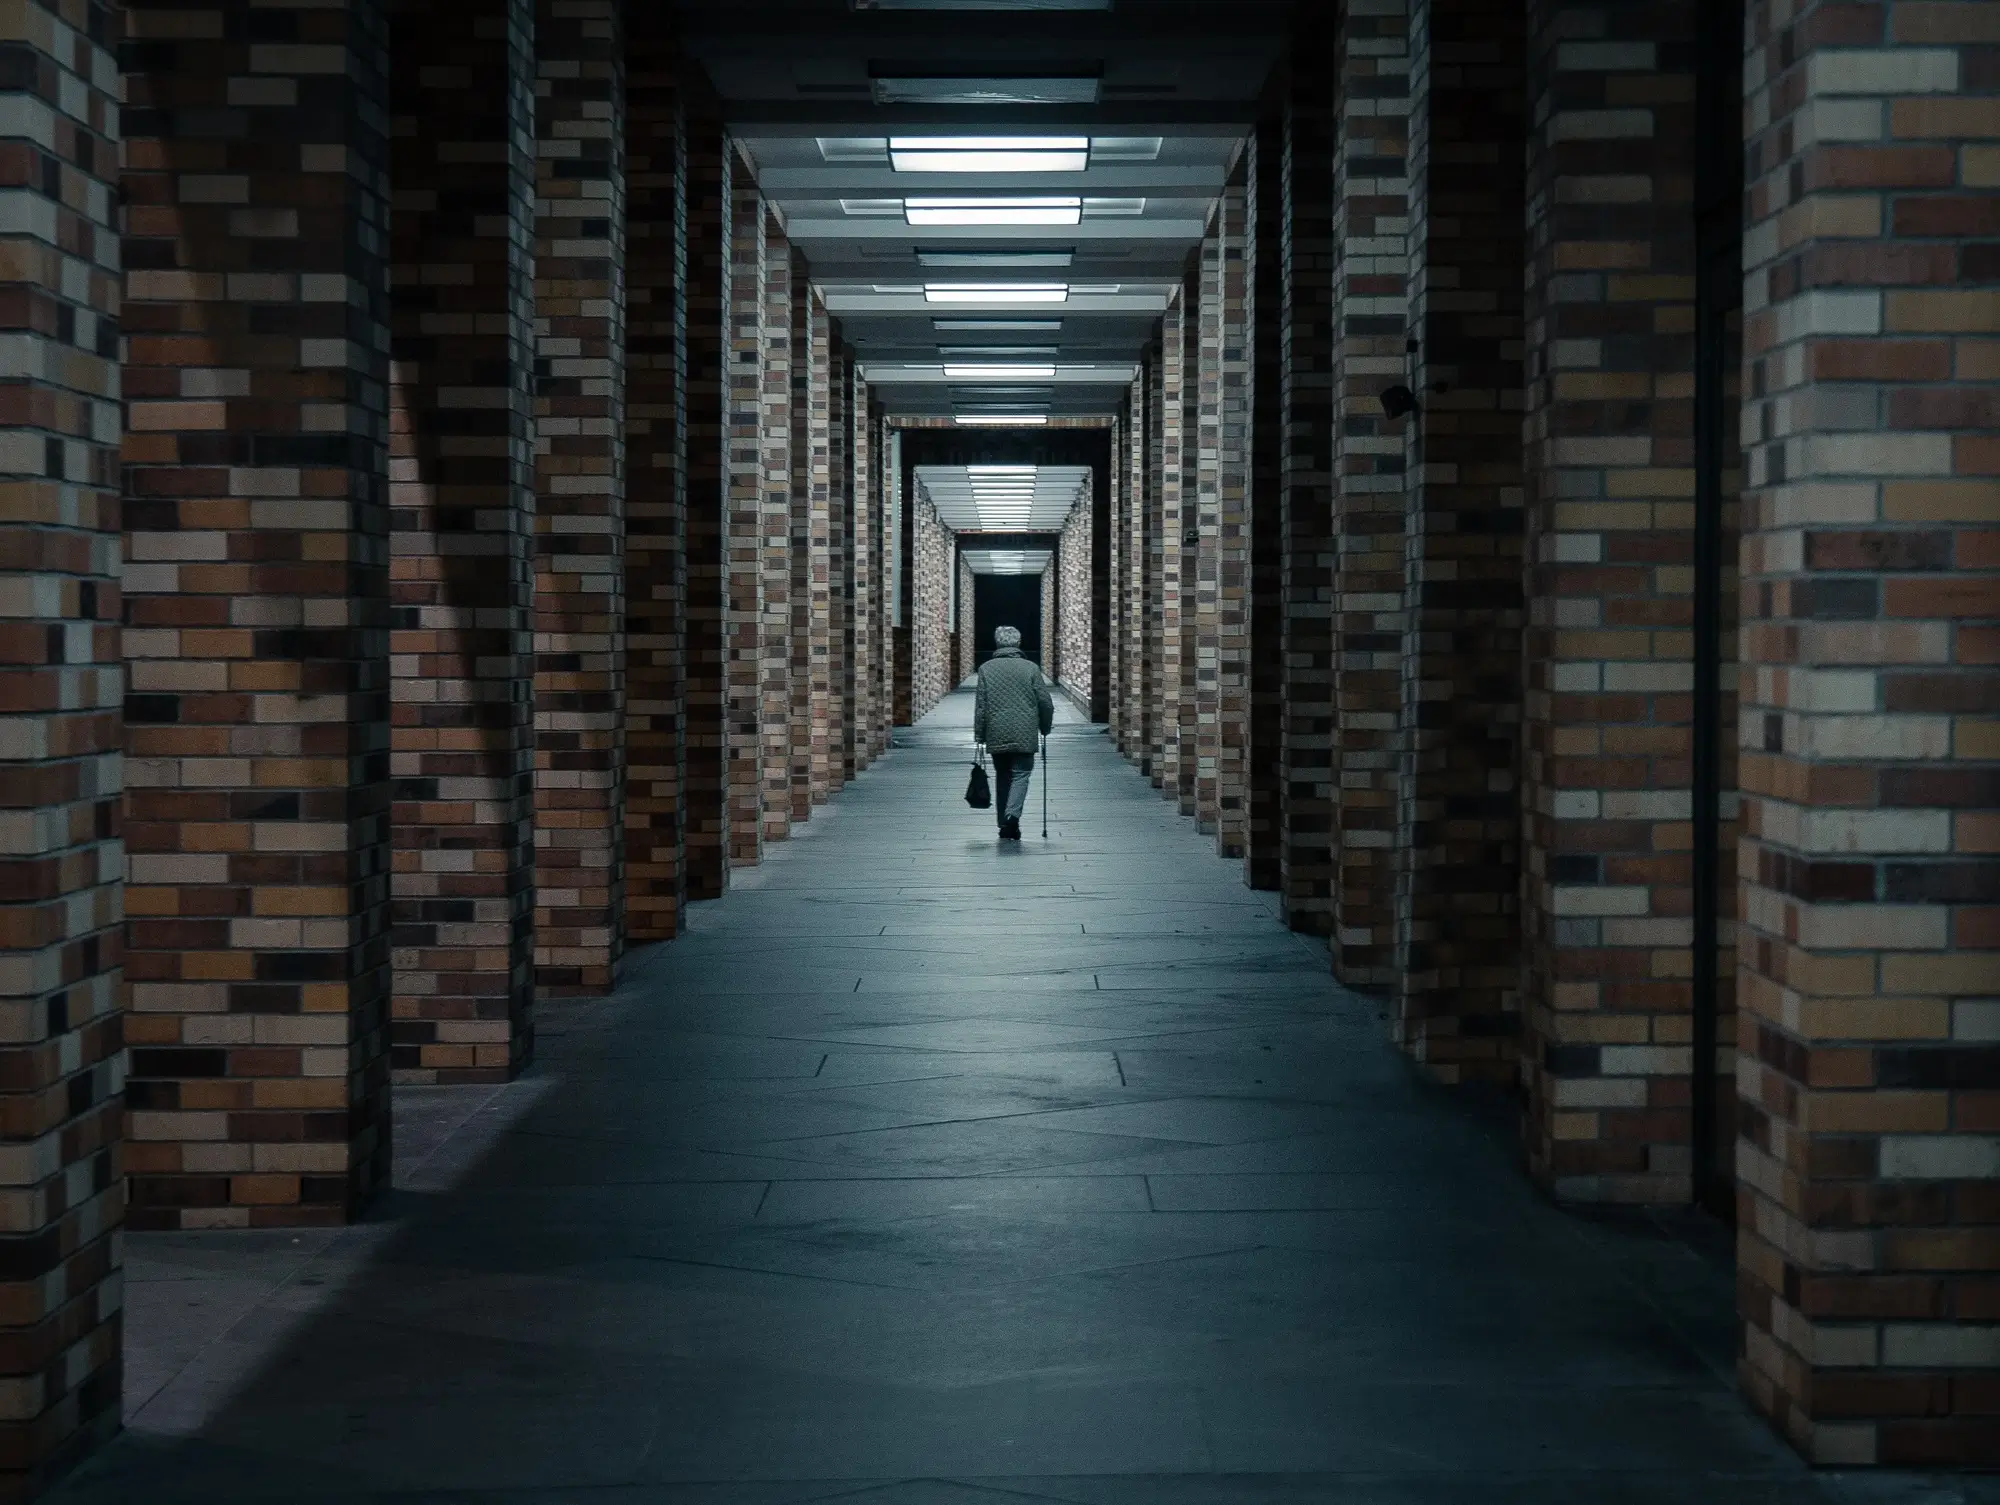 A man walking along an empty corridor, representing the concept of super death benefit.